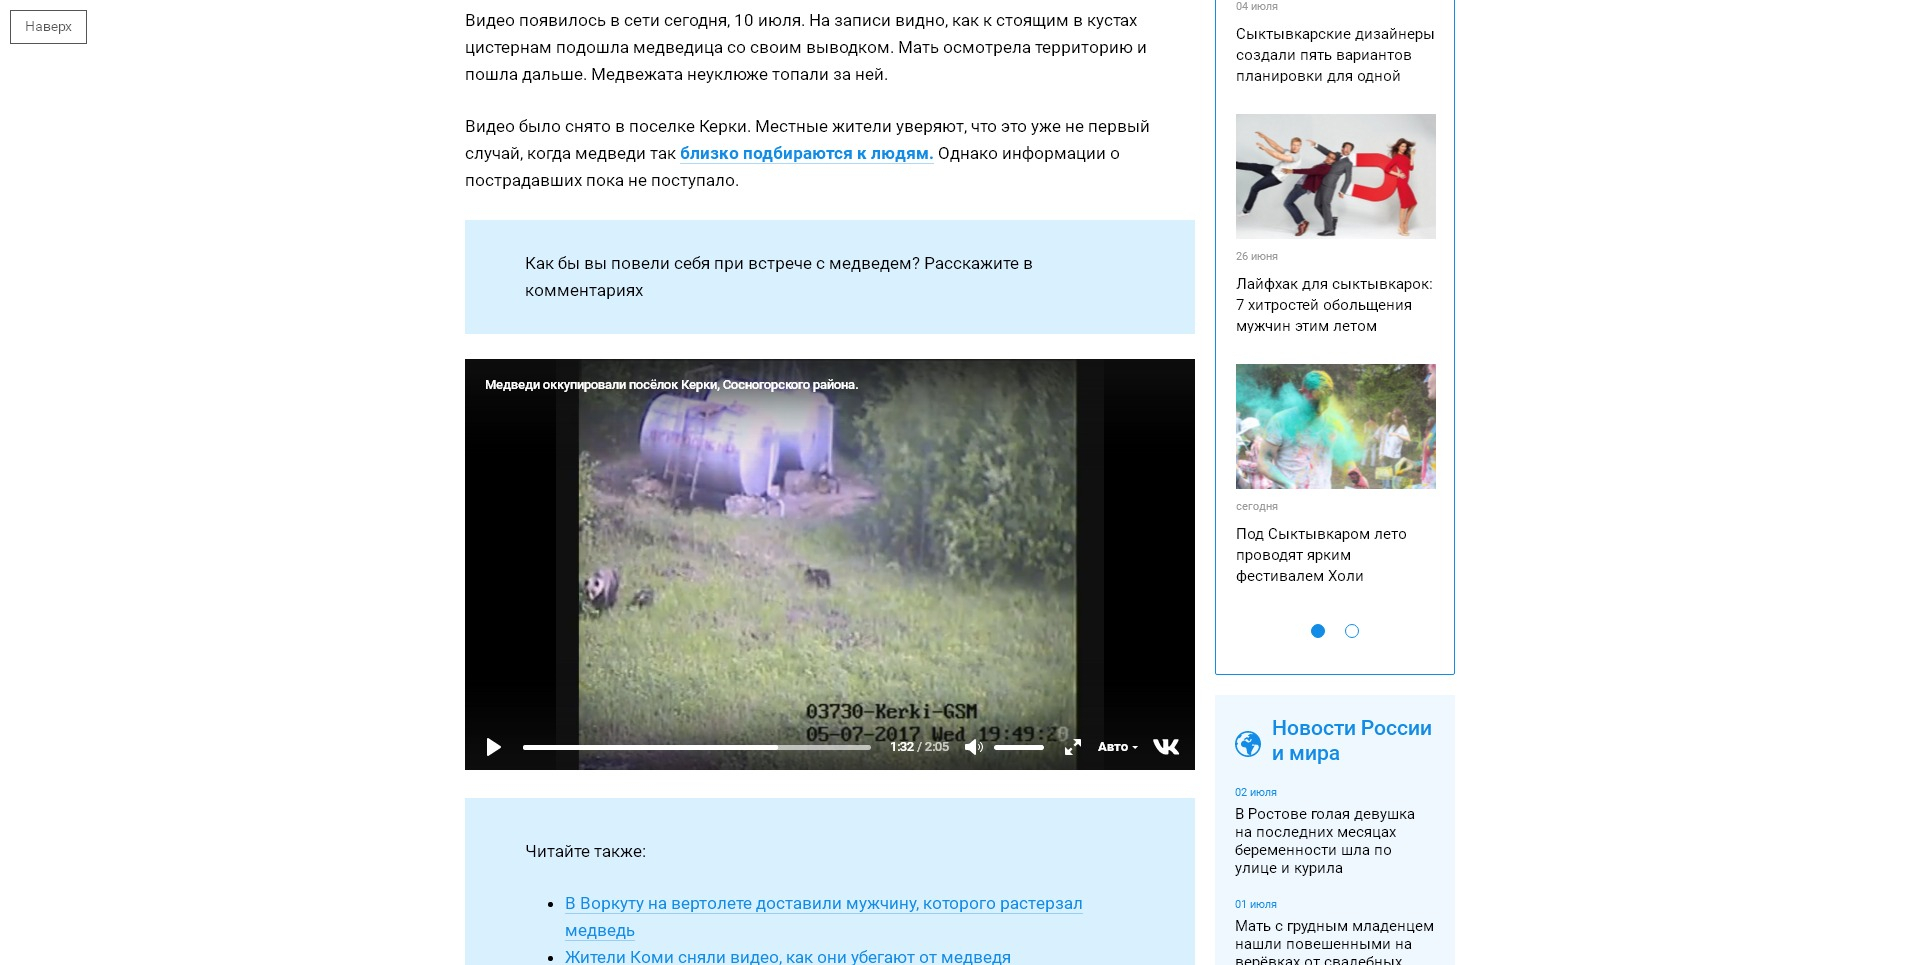 Один из поселков Коми захватило семейство медведей (видео)